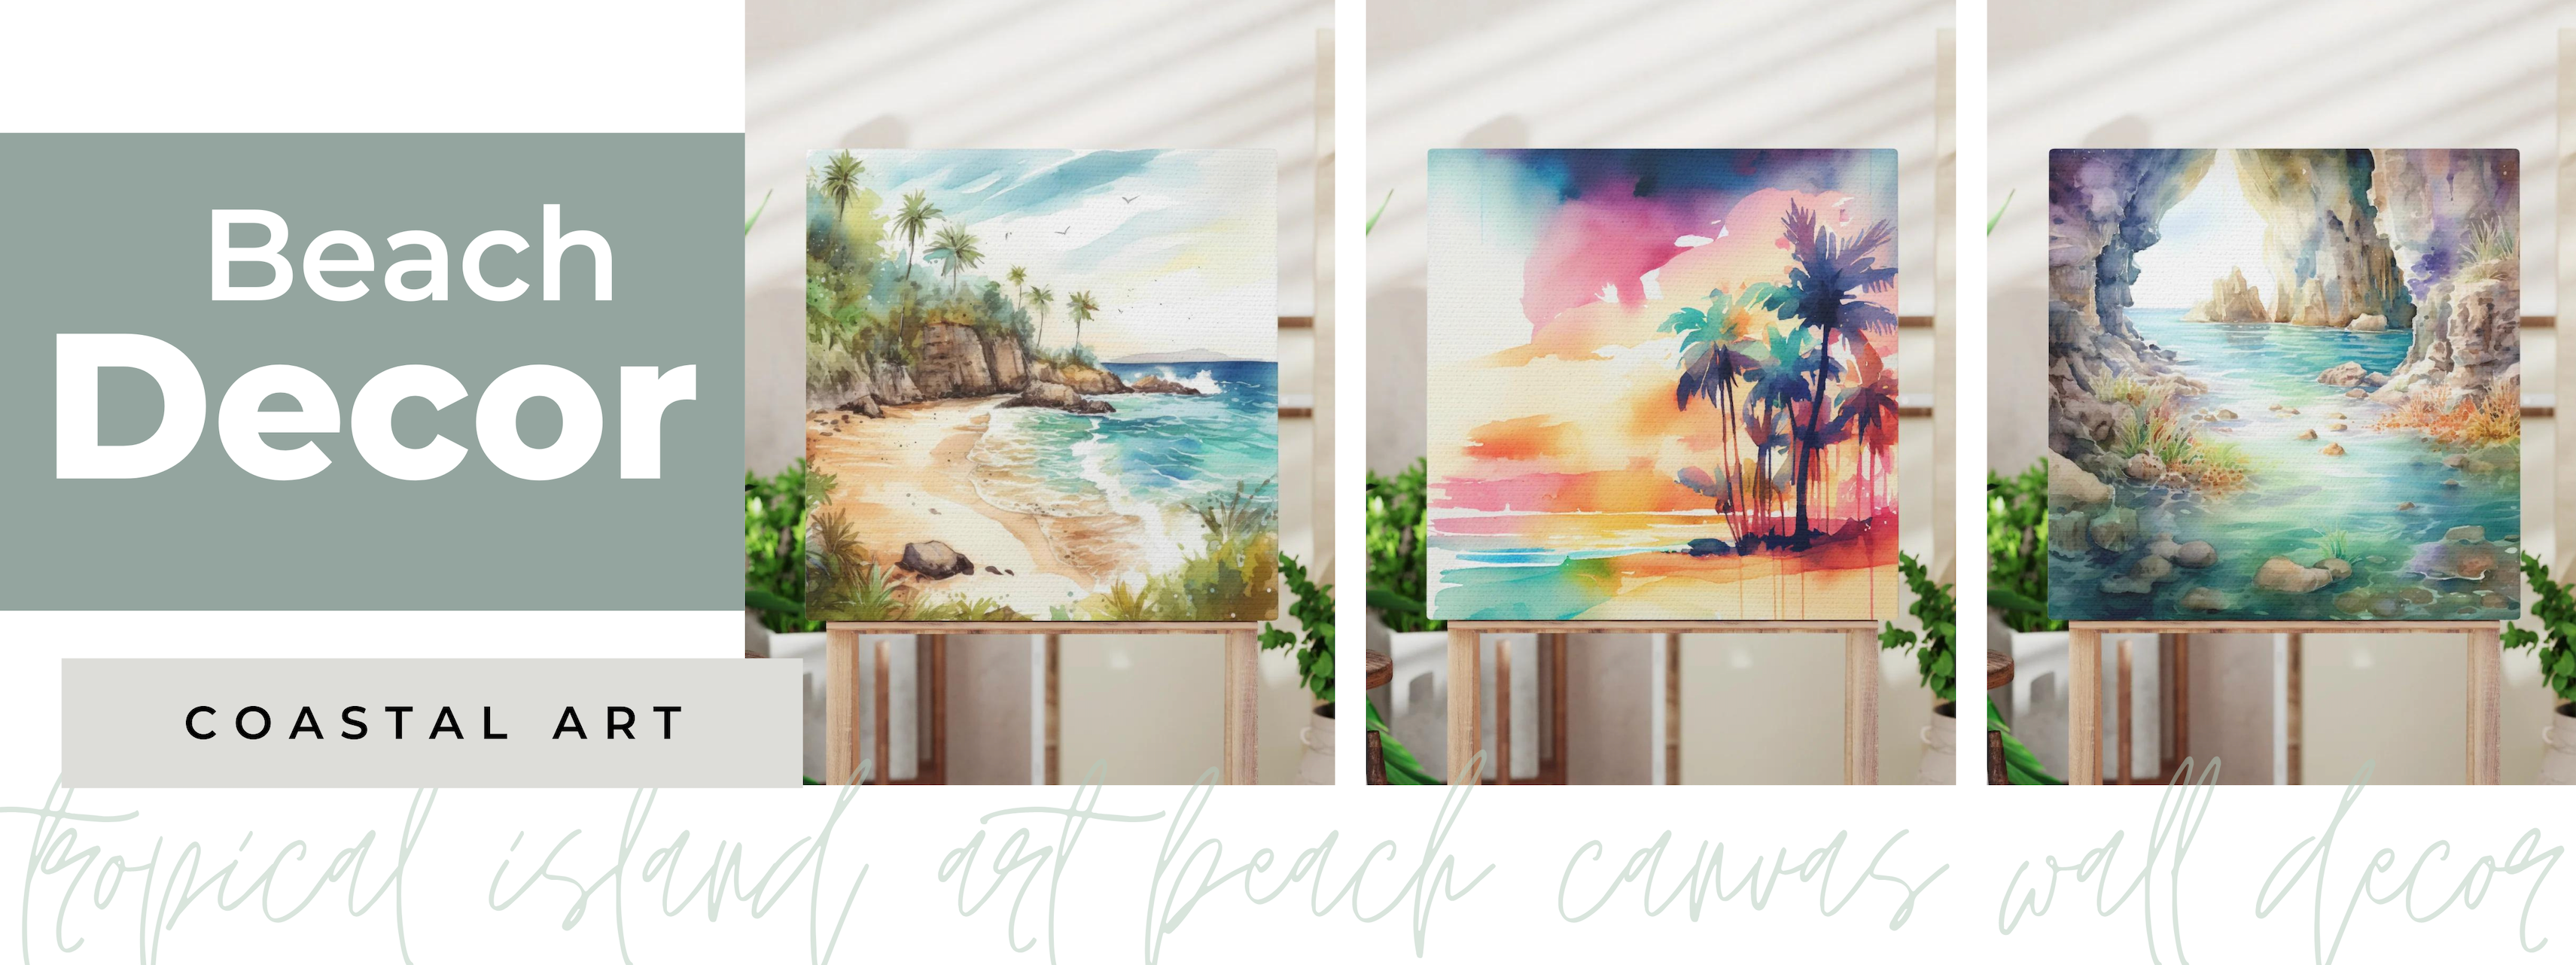 beach decor canvas banner